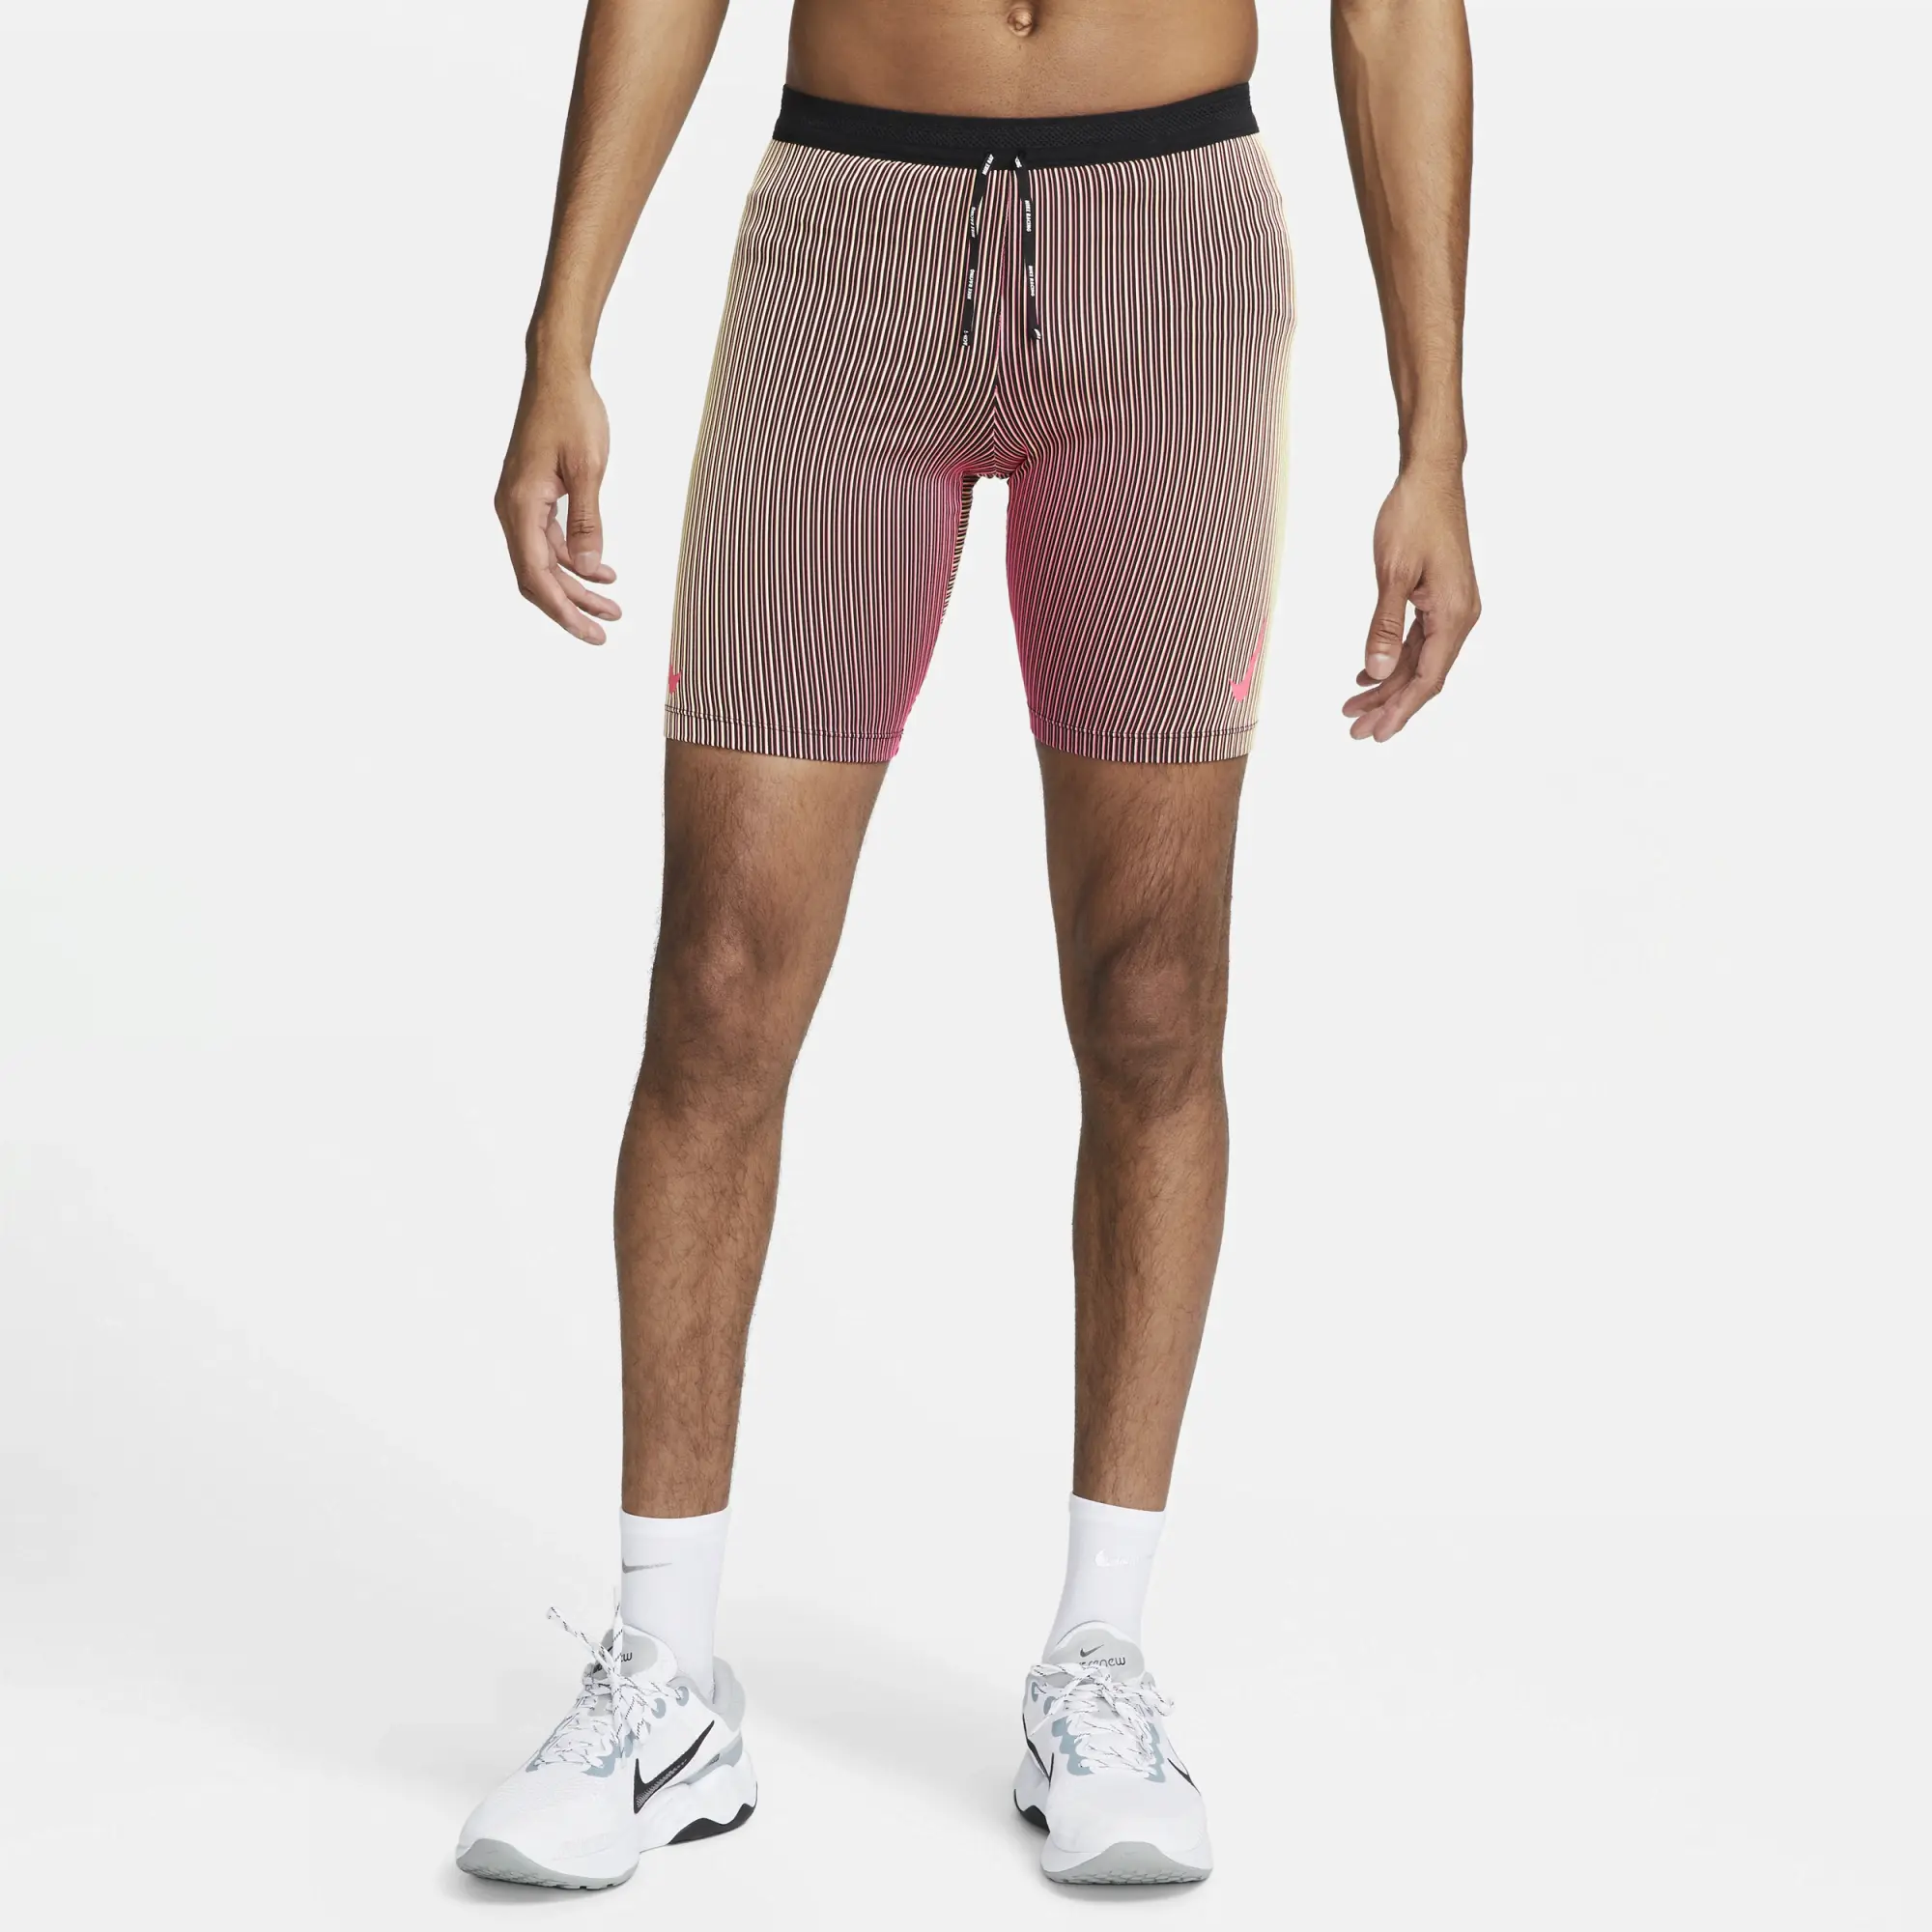 Nike Men's AeroSwift 1/2-Length Running Tights Black/White M